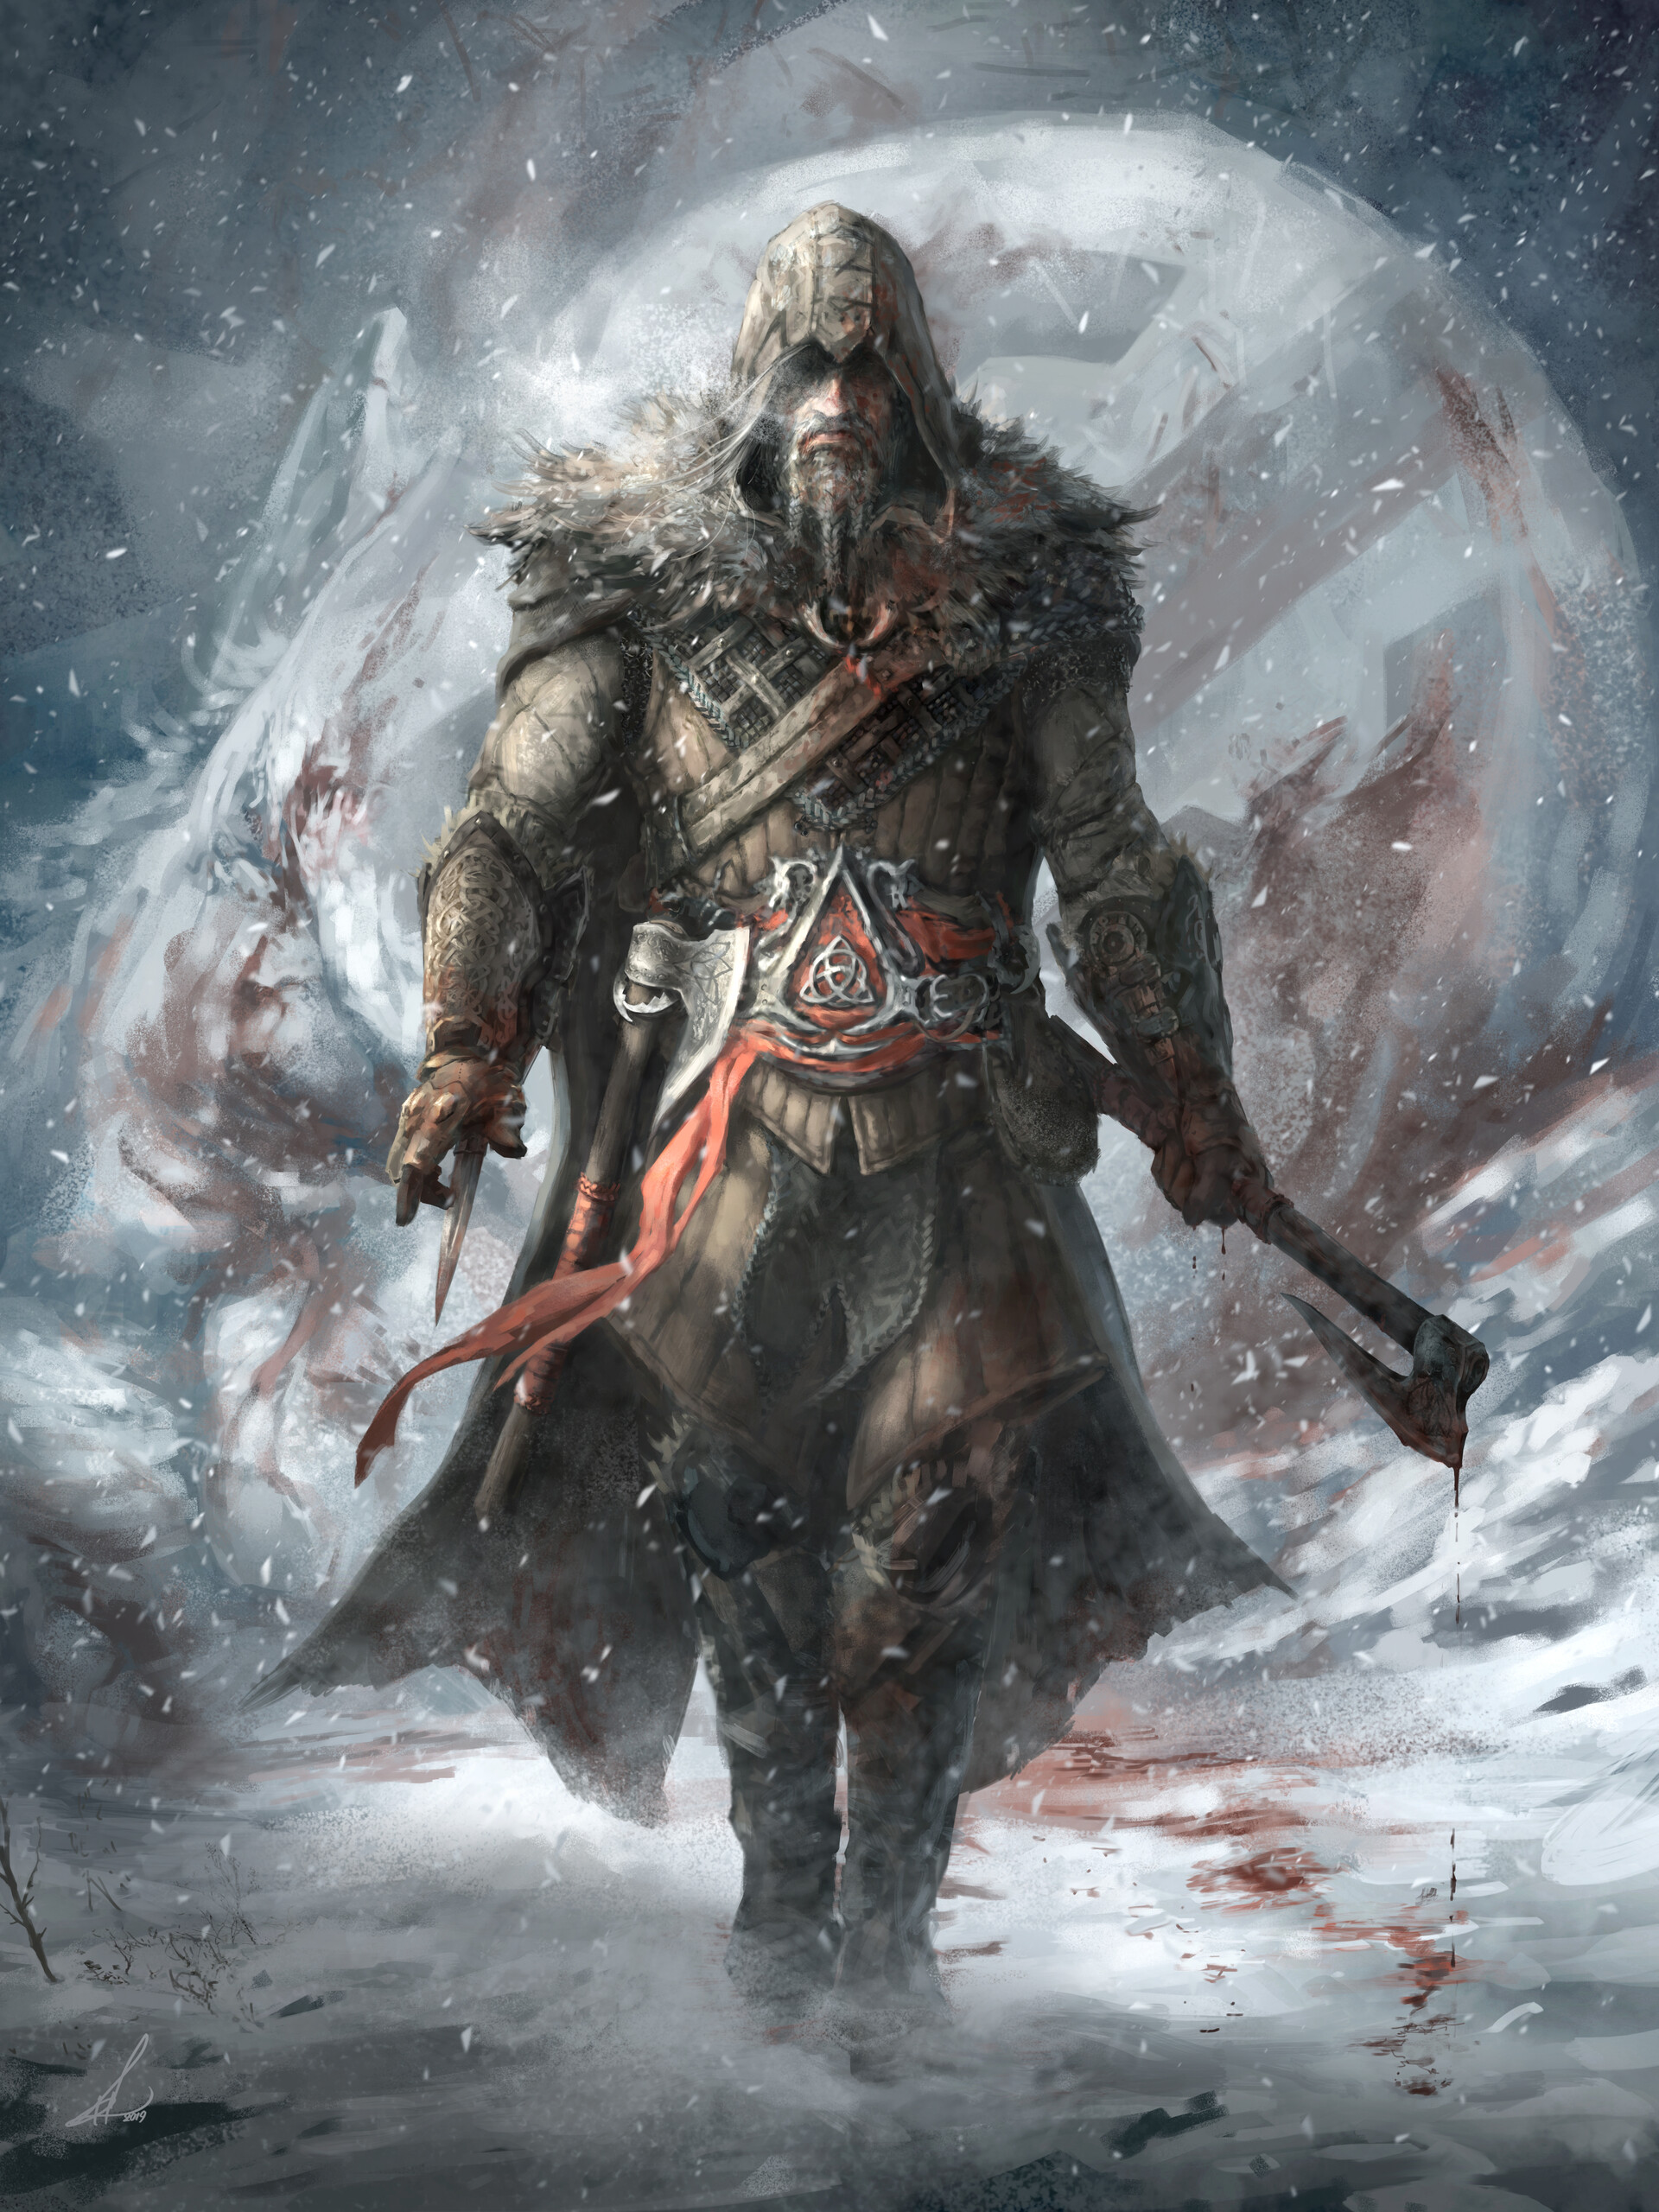 ArtStation - Heimdallr - God Of War Inspired Character